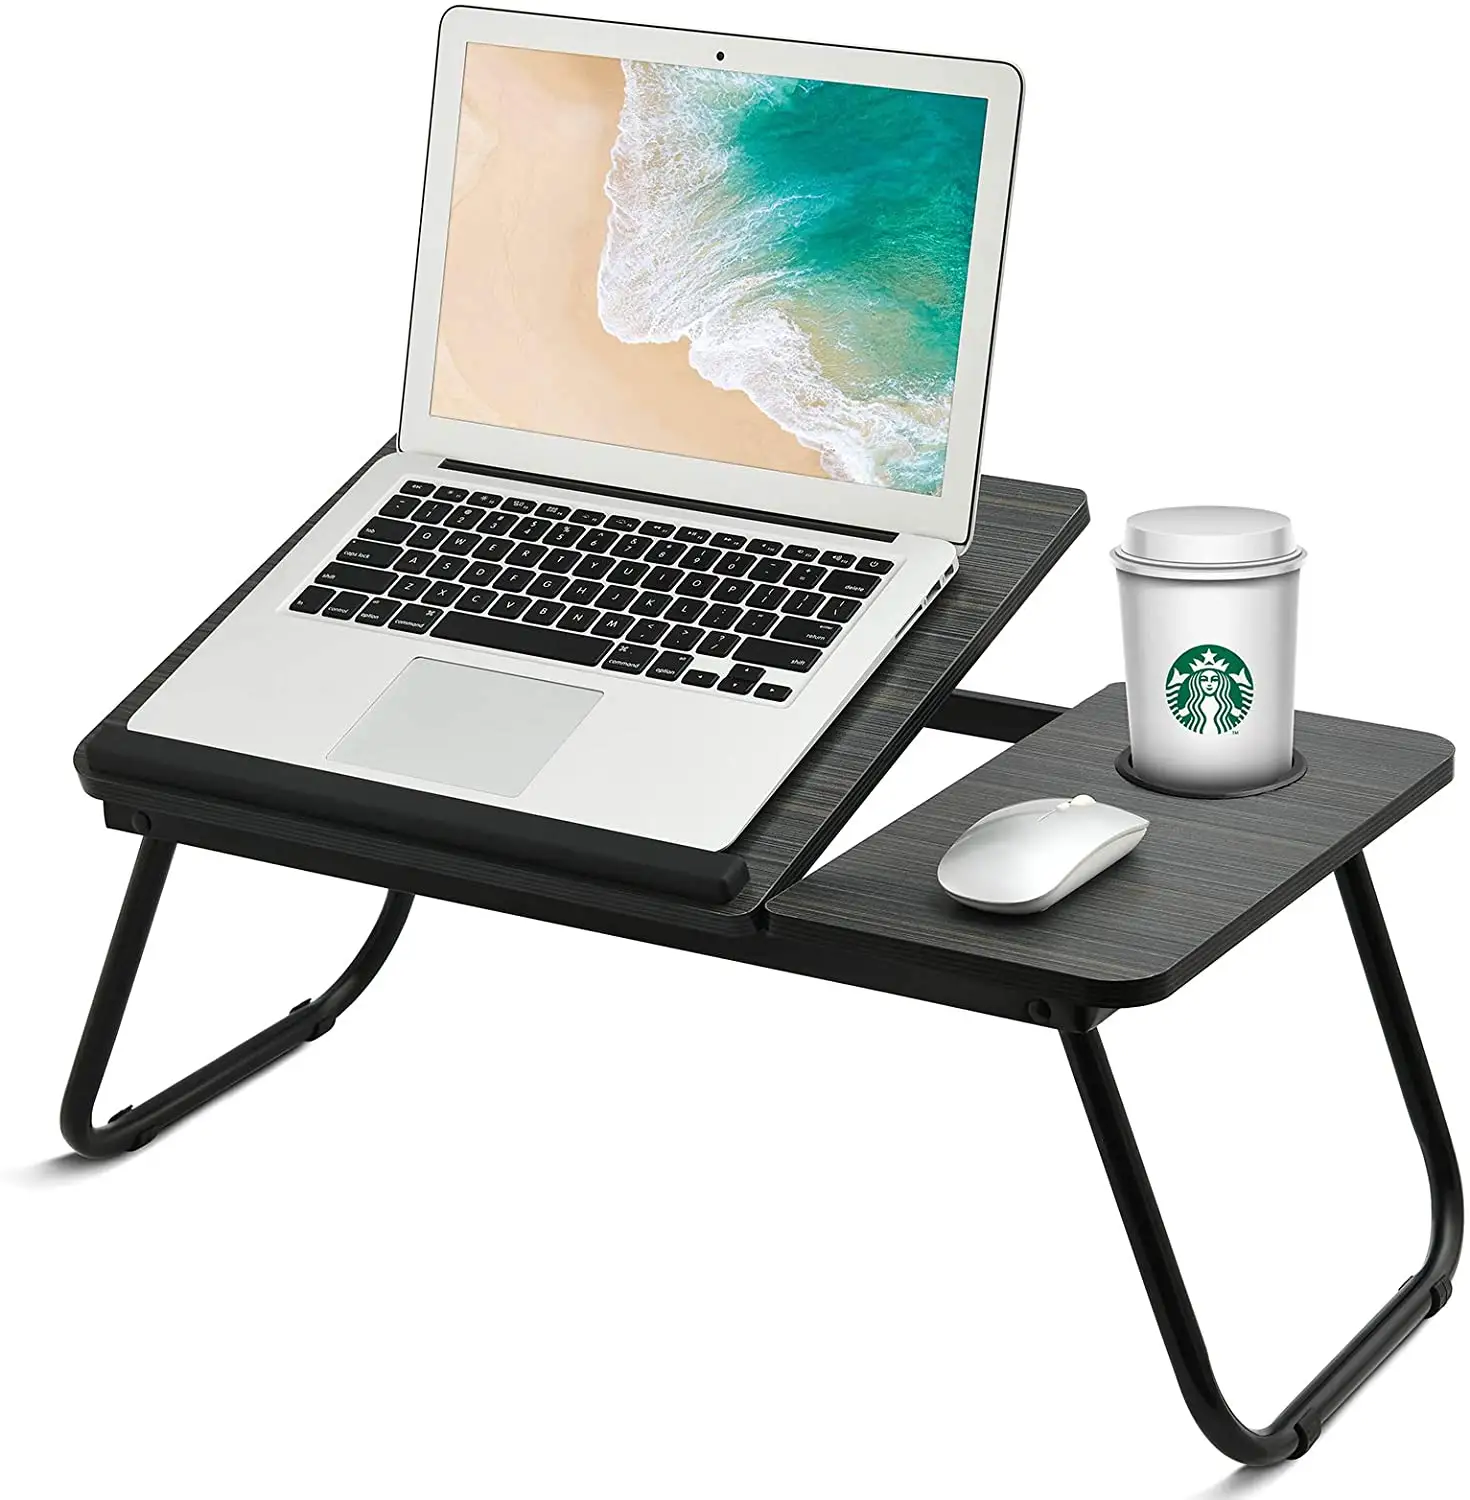 Lap שולחן מתכוונן 17 אינץ מחשב נייד שולחן שולחן עבור מיטת ספה, נייד מיטת למעלה מחשב נייד שולחן לאכילה כתיבה קריאה